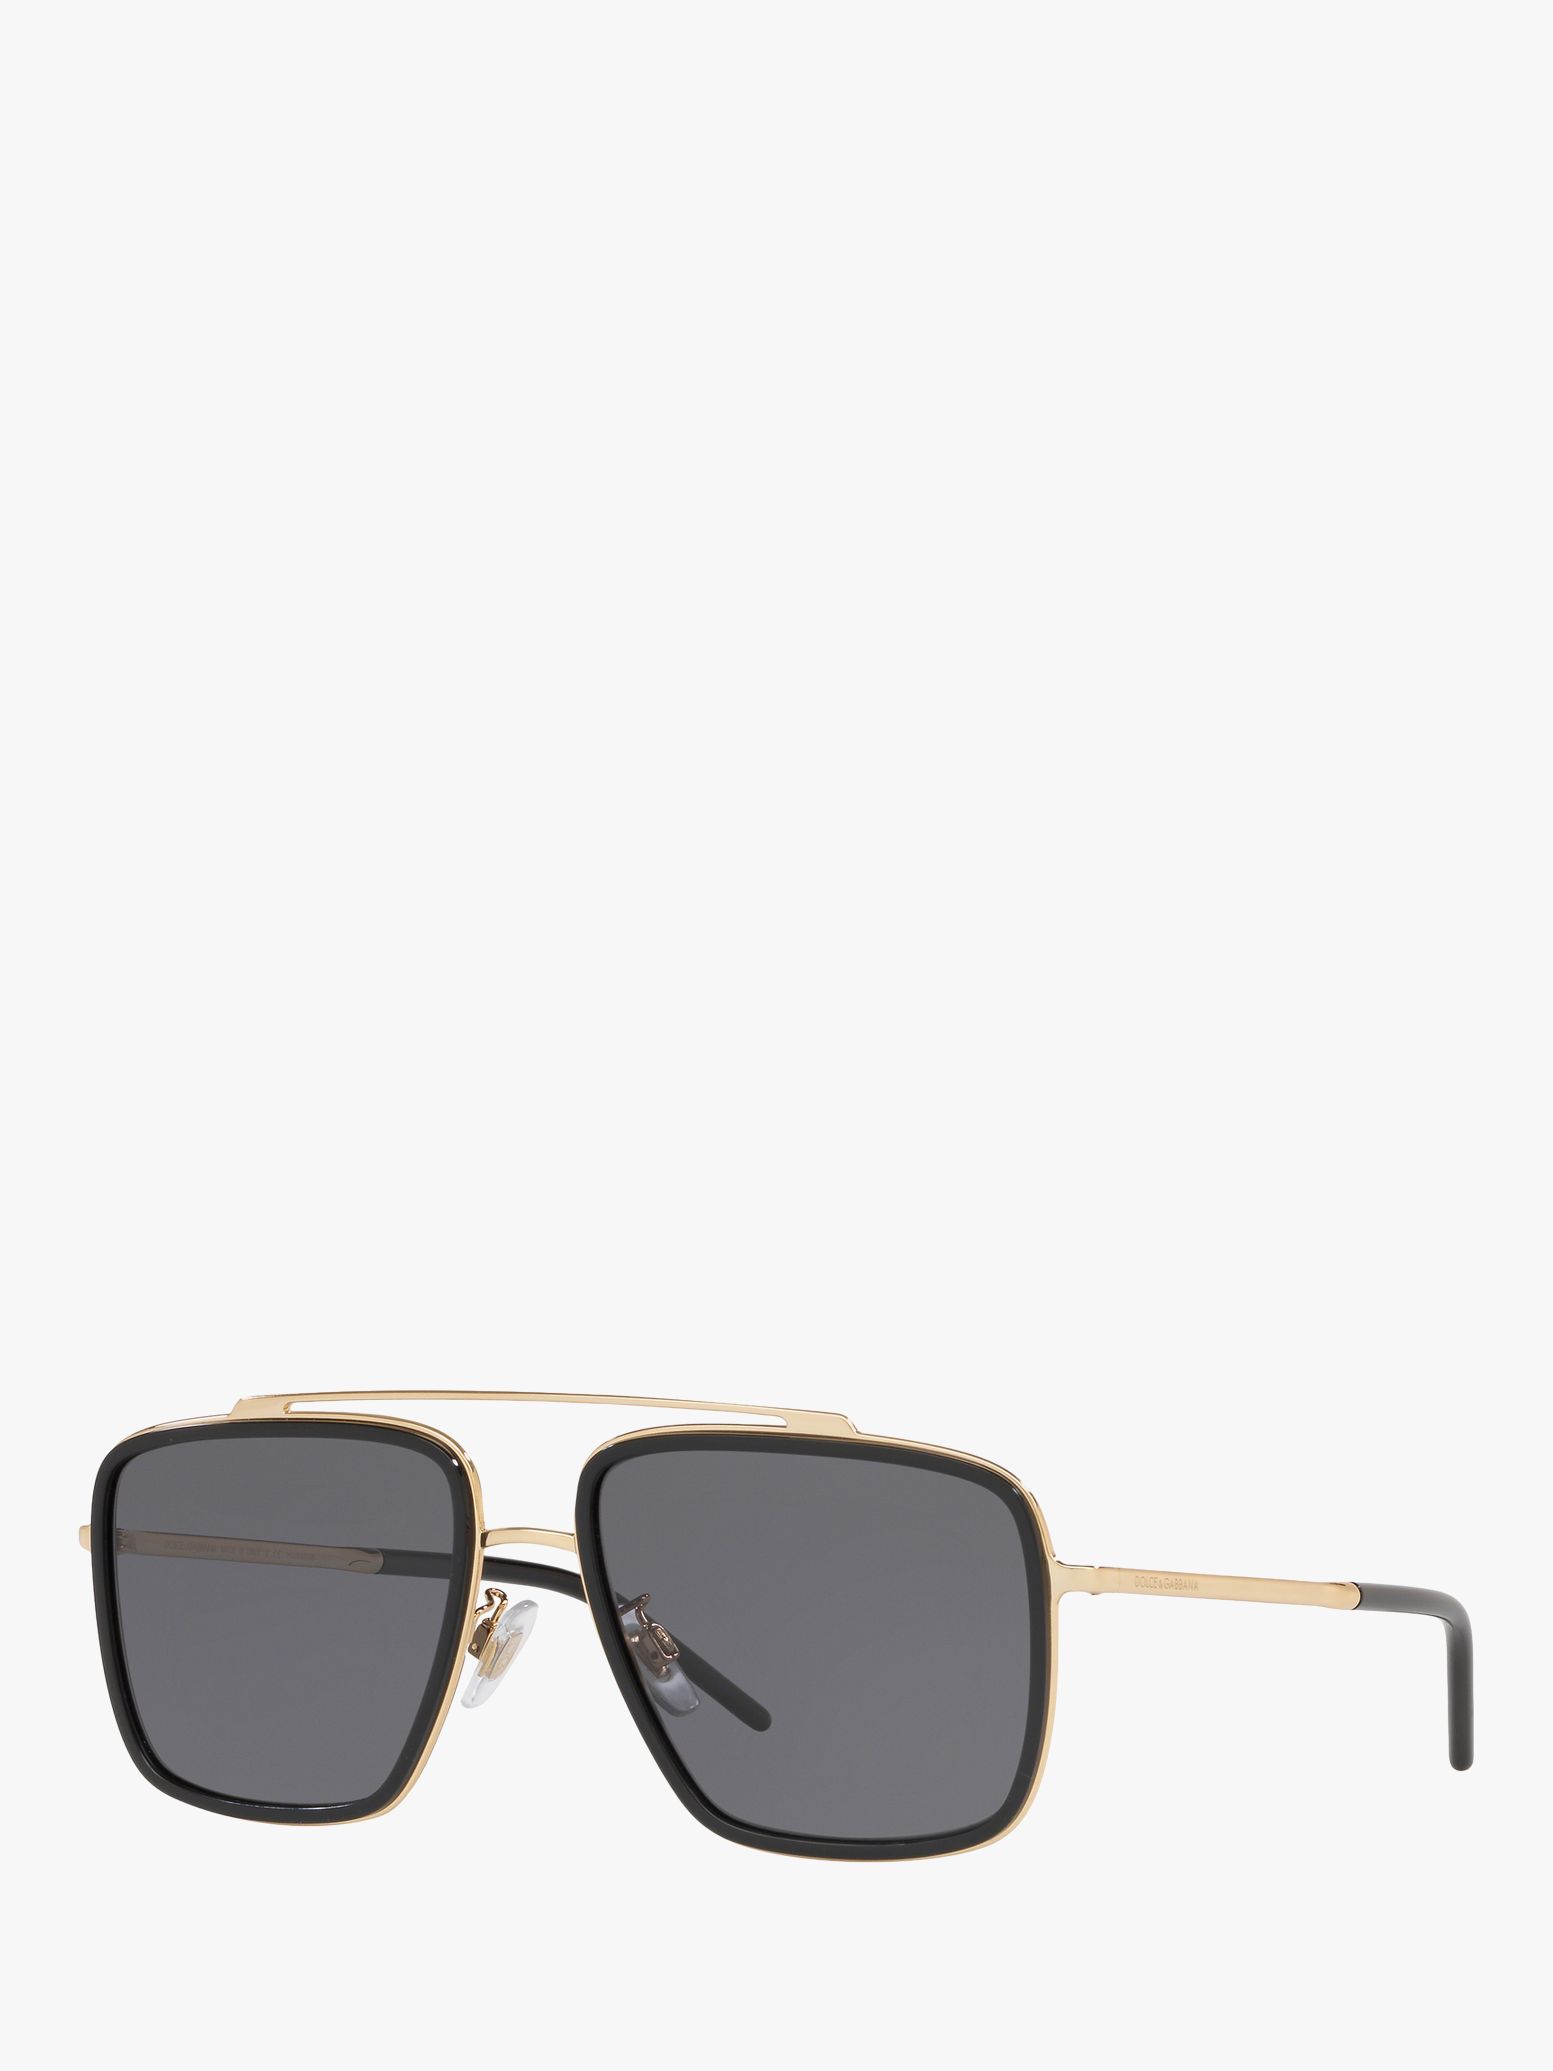 Dolce & Gabbana DG2220 Men's Polarised Square Sunglasses, Gold 